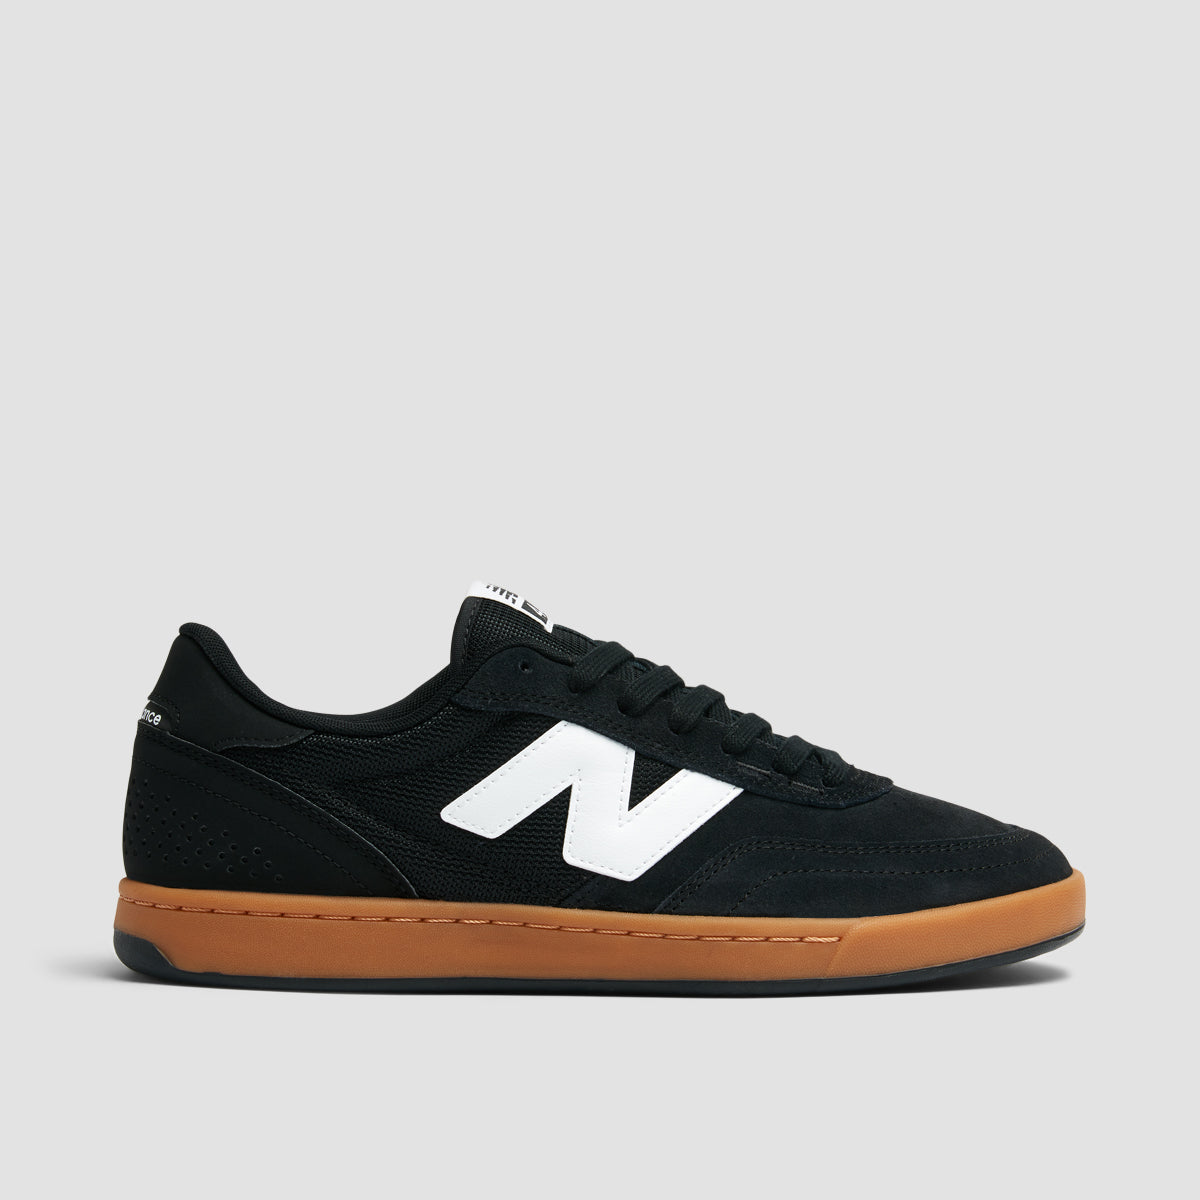 New Balance Numeric 440 V2 Shoes - Black/White